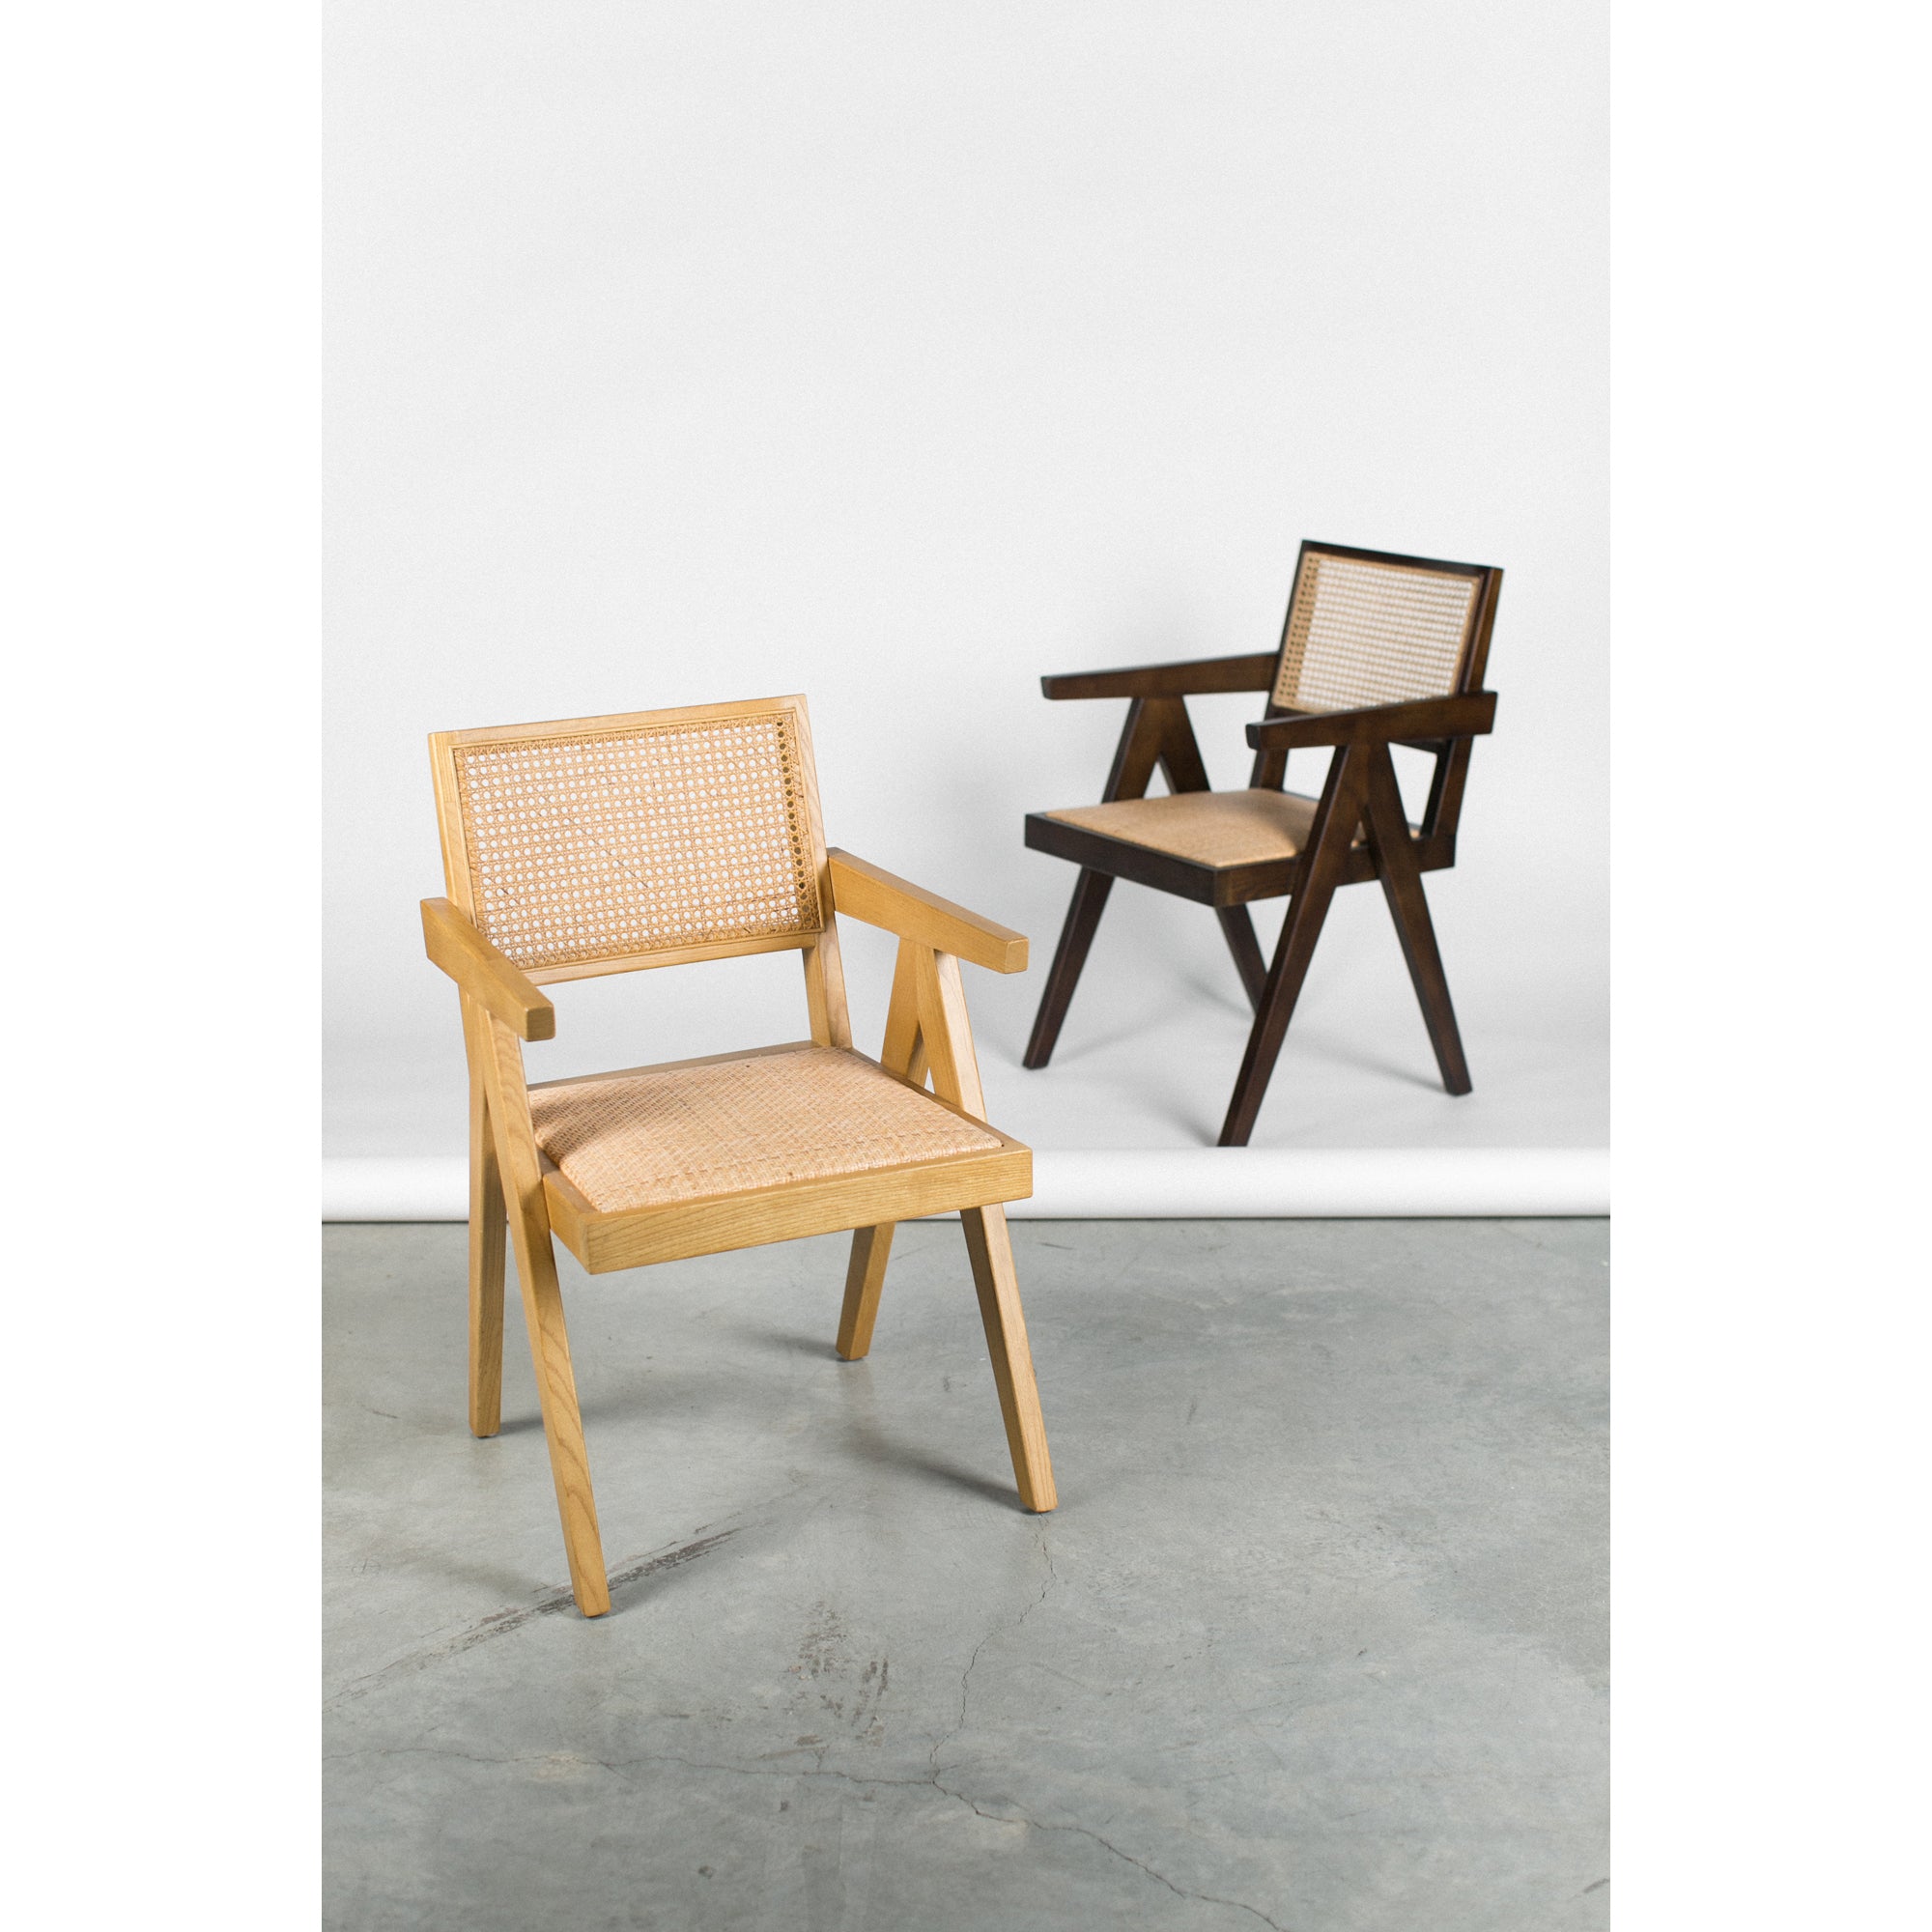 Takashi Chair Black- Set Of Two